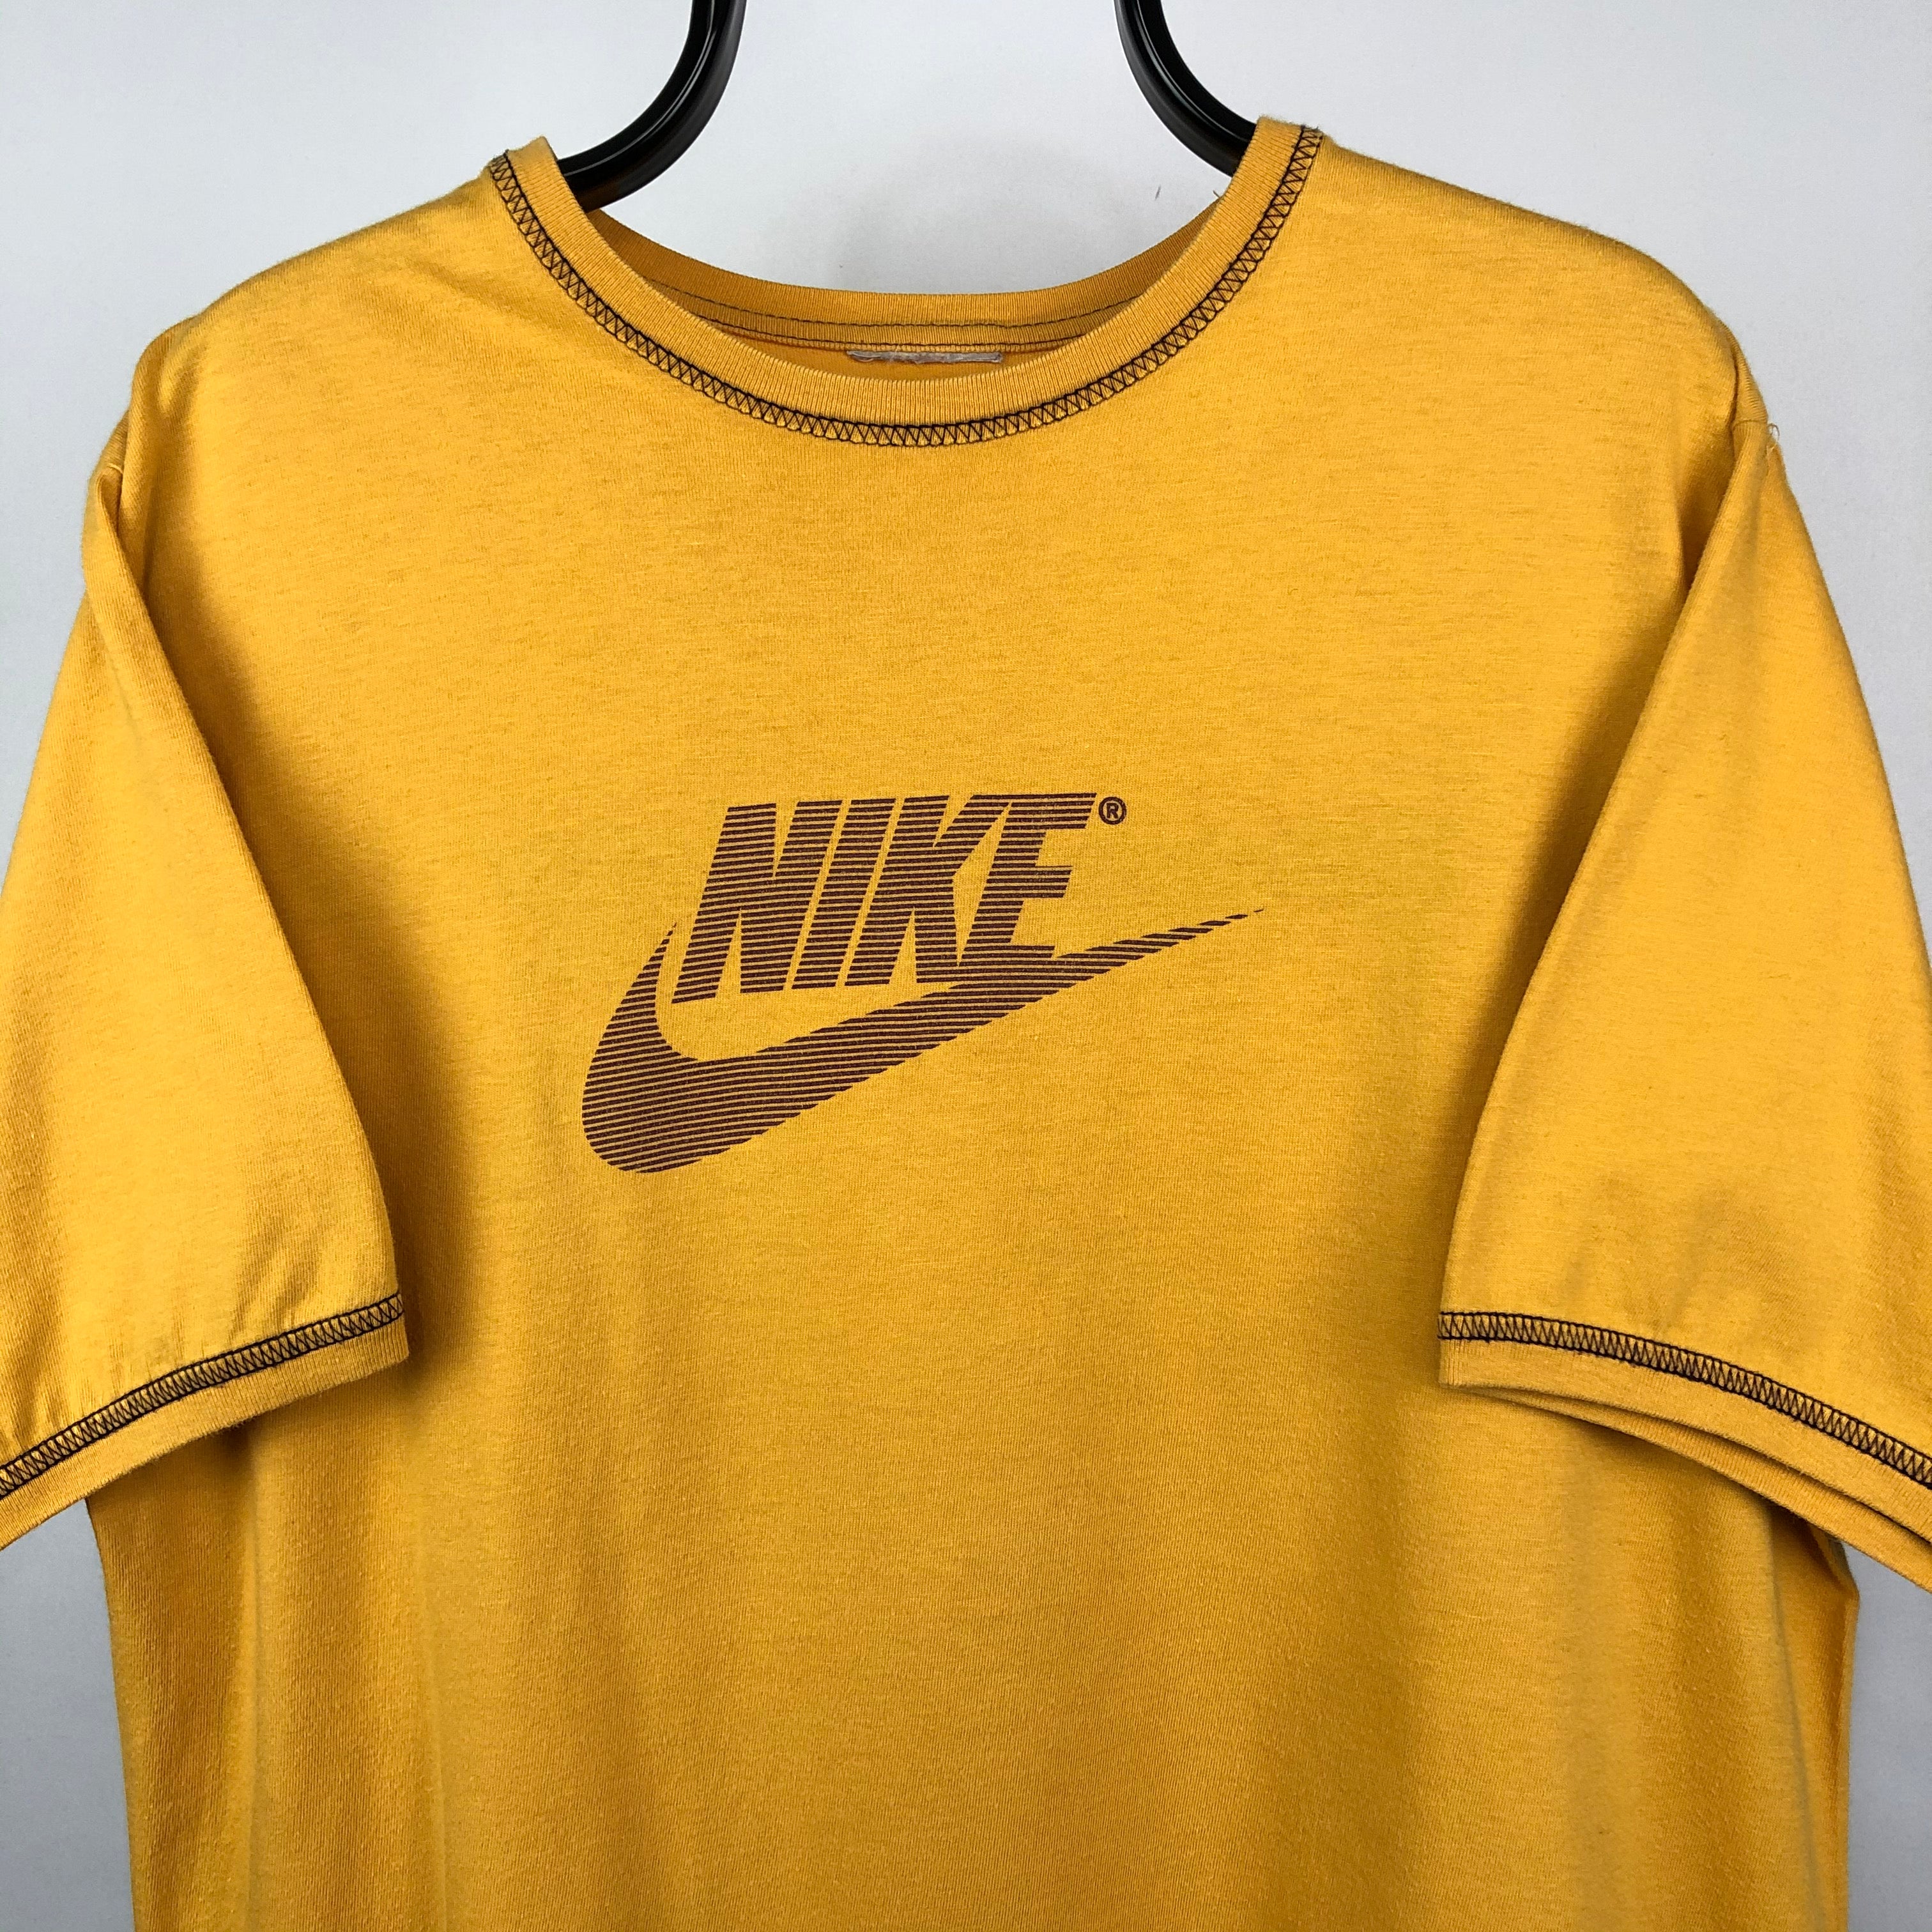 Vintage Nike Spellout Tee in Mustard - Men's Large/Women's XL ...